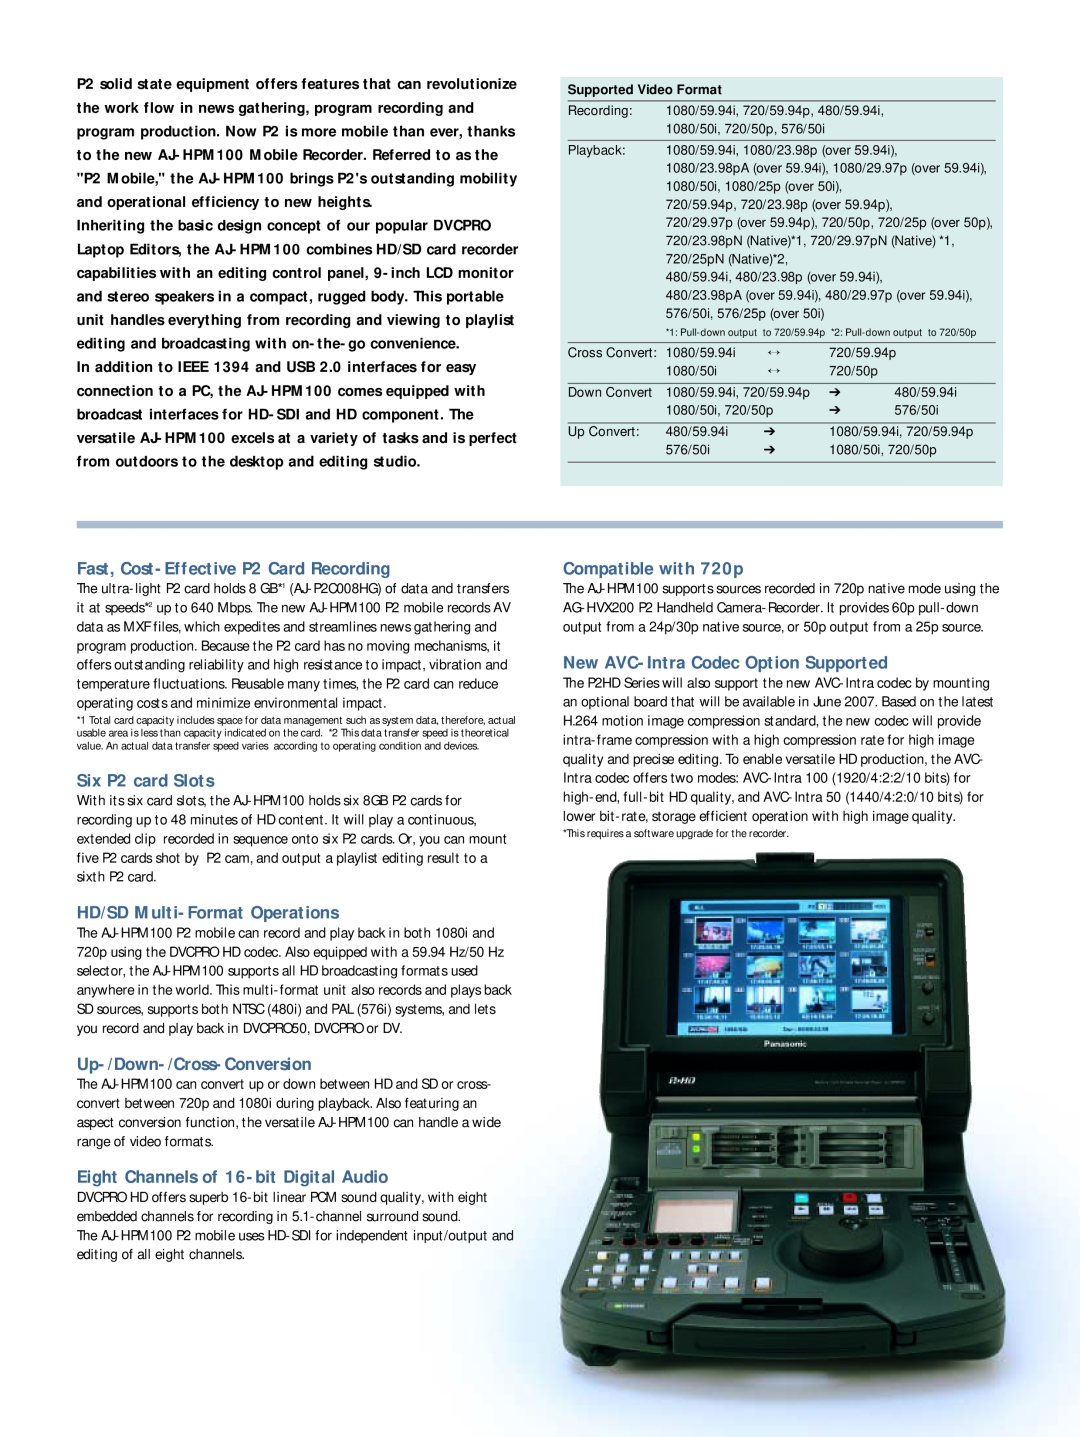 Panasonic AJ-HPM100E manual Fast, Cost-Effective P2 Card Recording, Six P2 card Slots, HD/SD Multi-Format Operations 